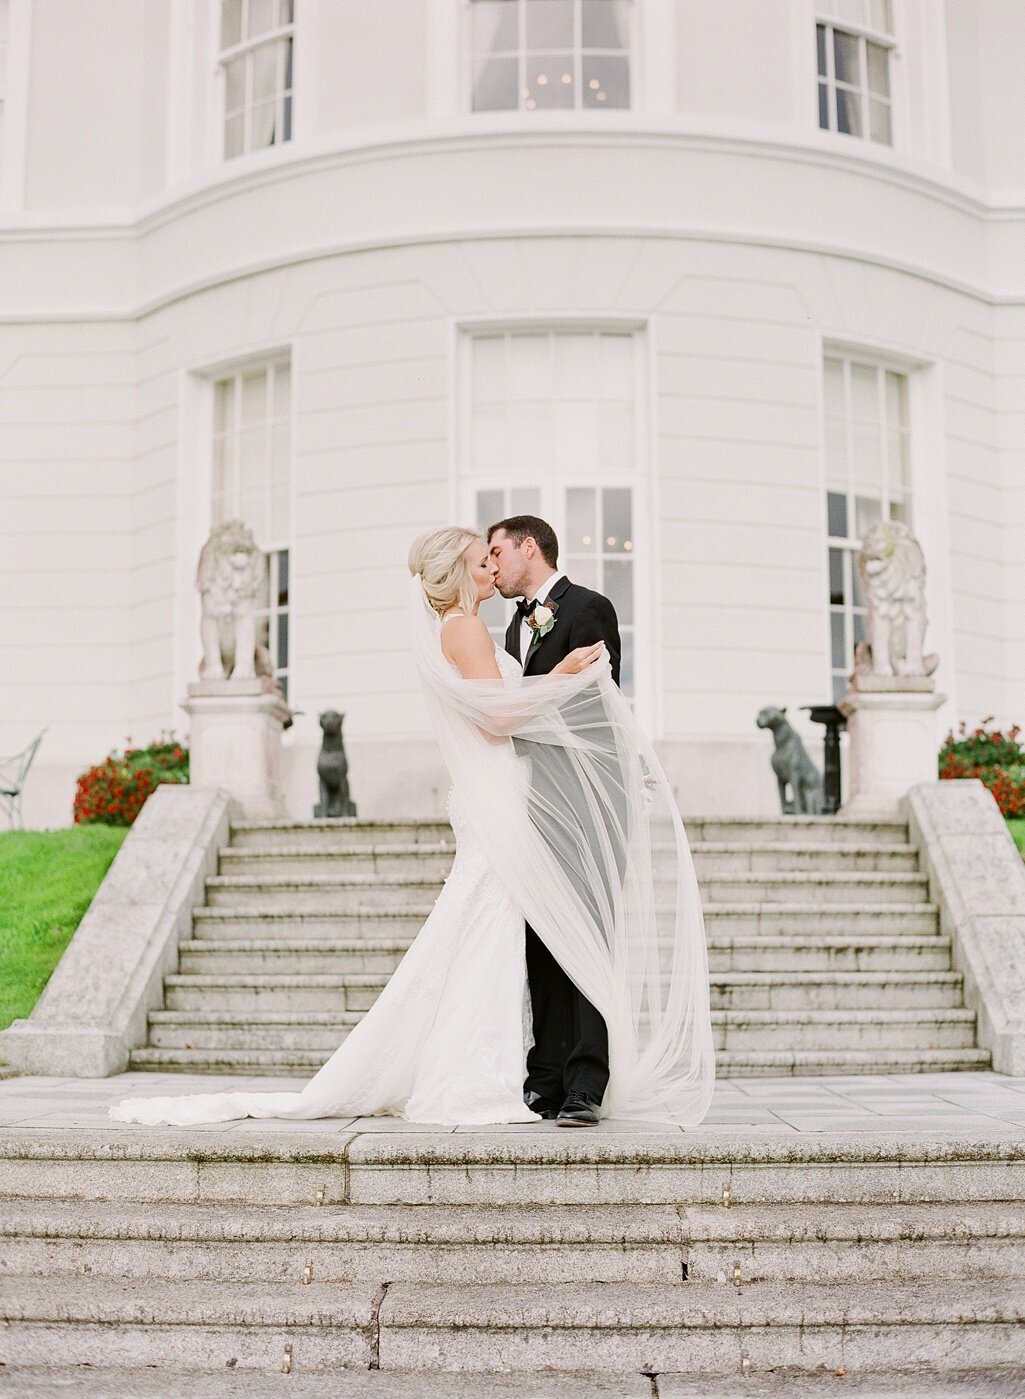 Jessie-Barksdale-Photography_K-Club-Ireland-Destination-Wedding-Photographer_0063